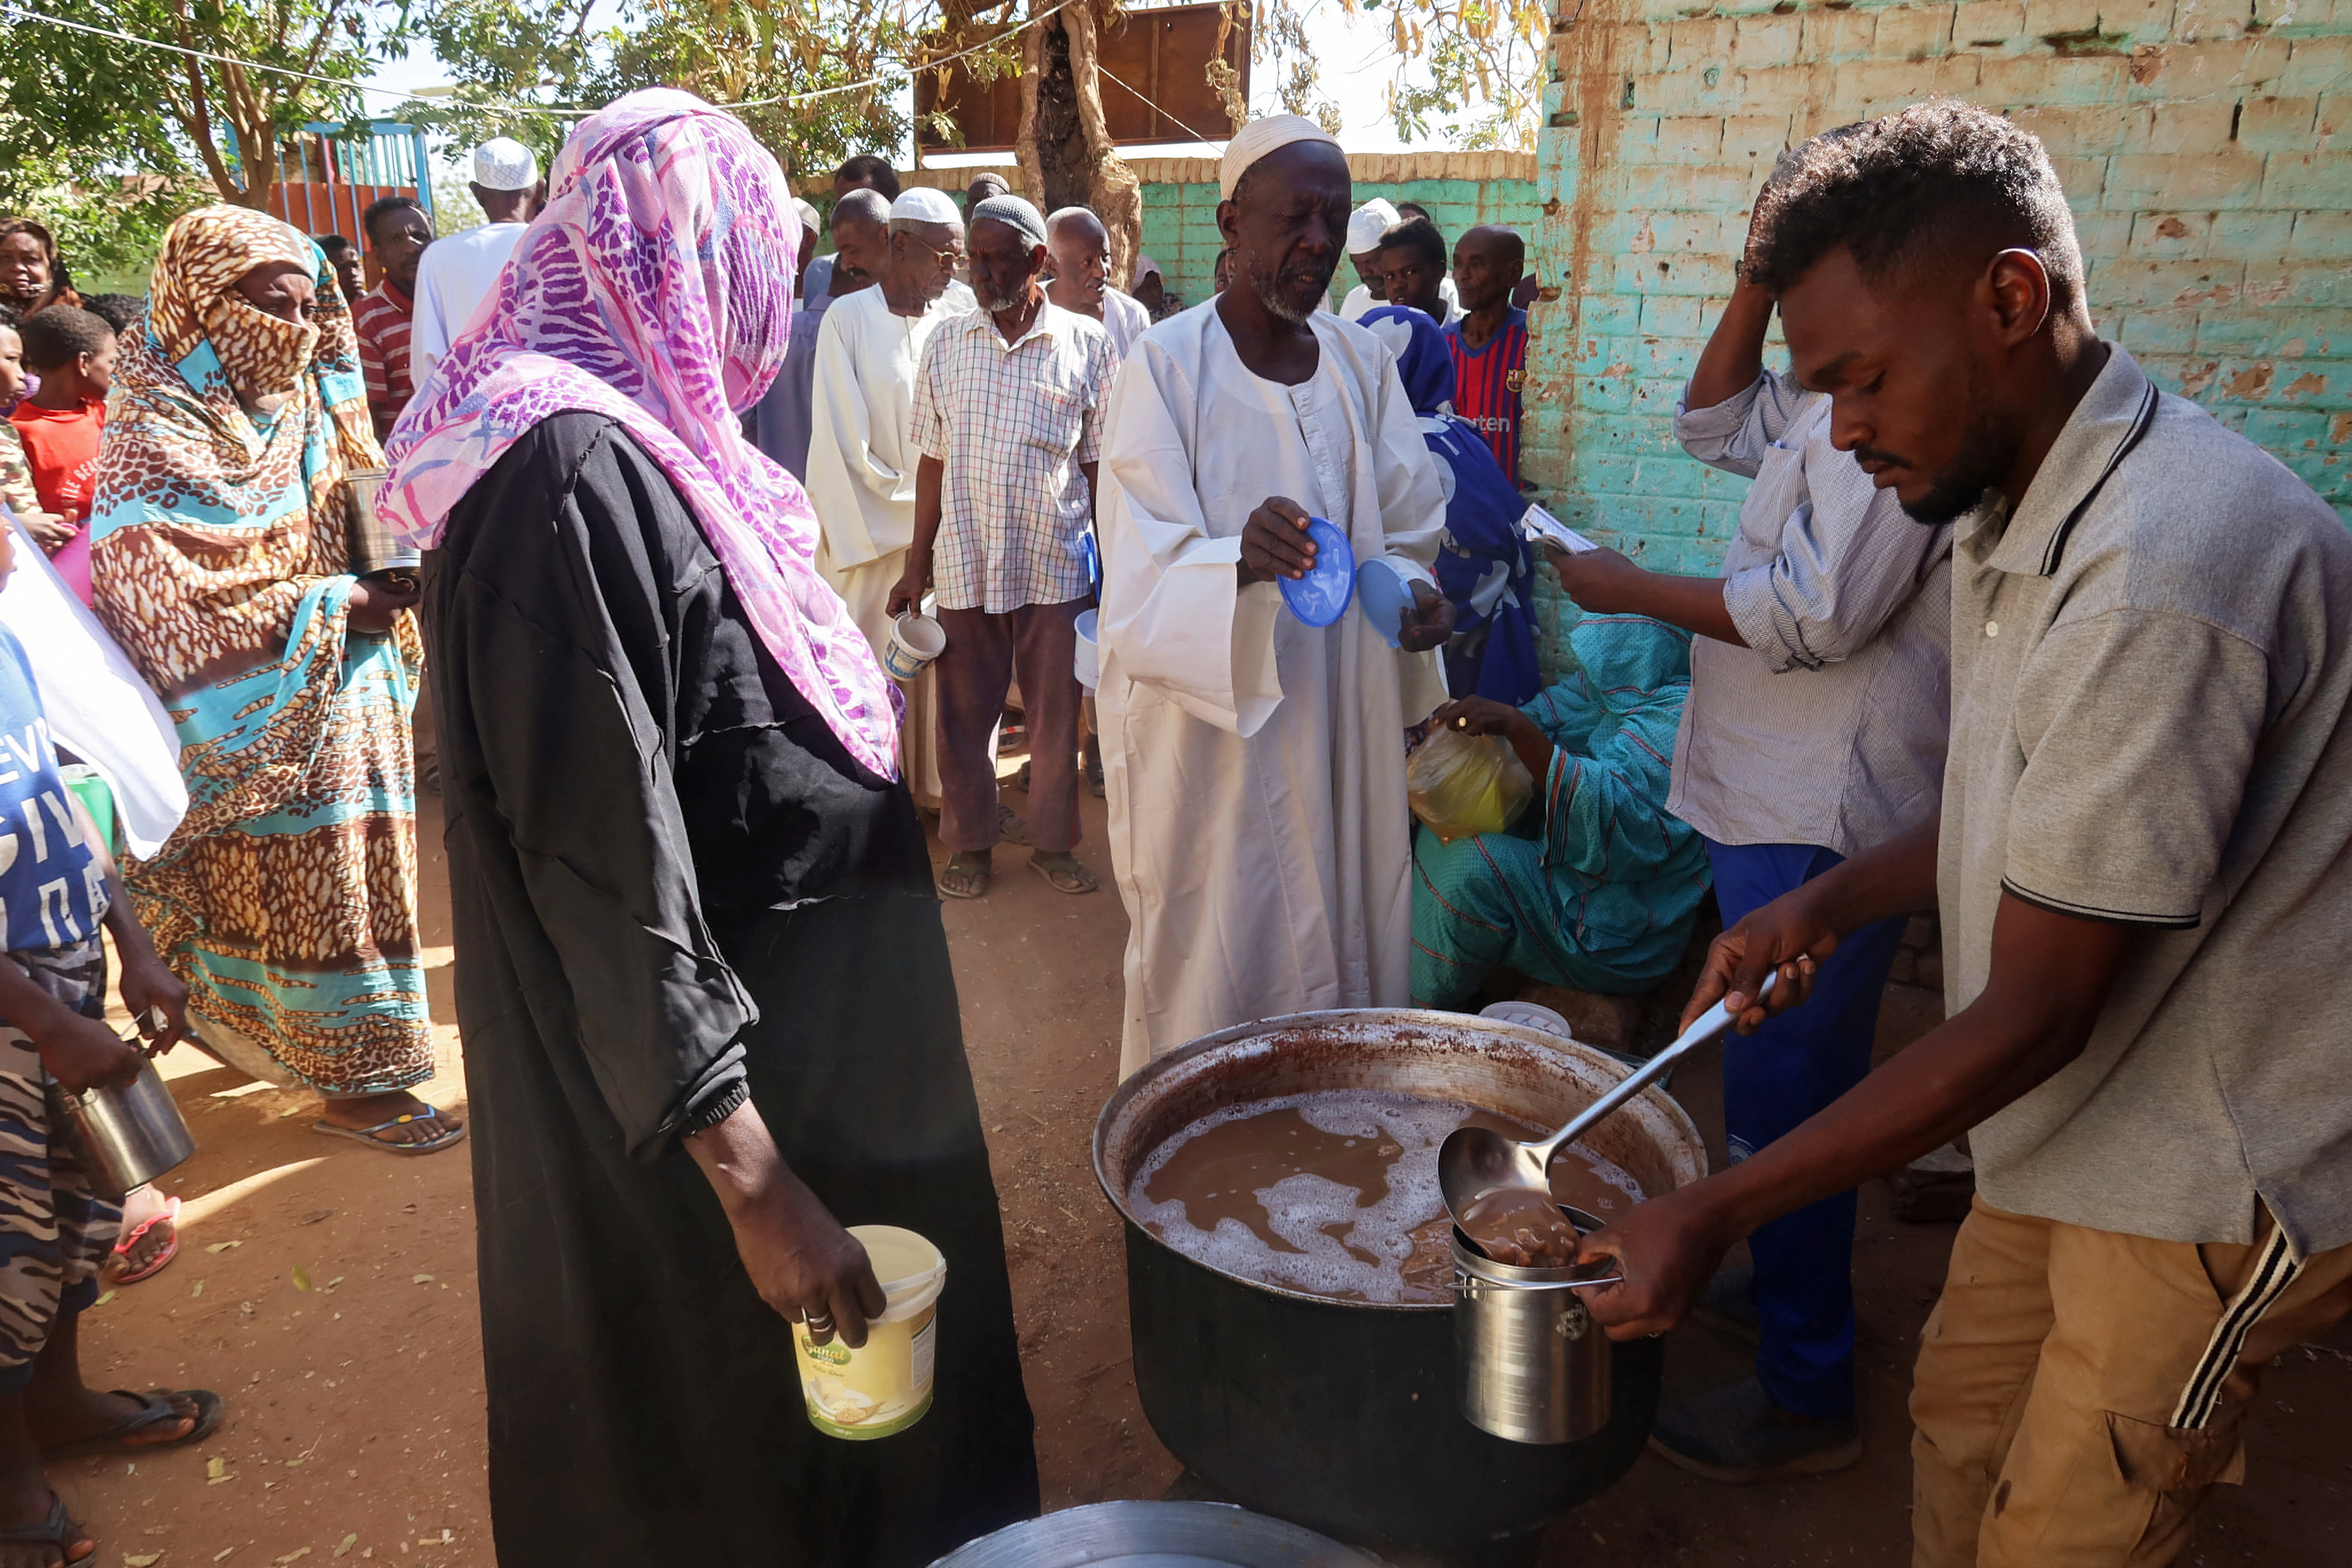 Volunteers distribute food to residents and displaced people in Omdurman